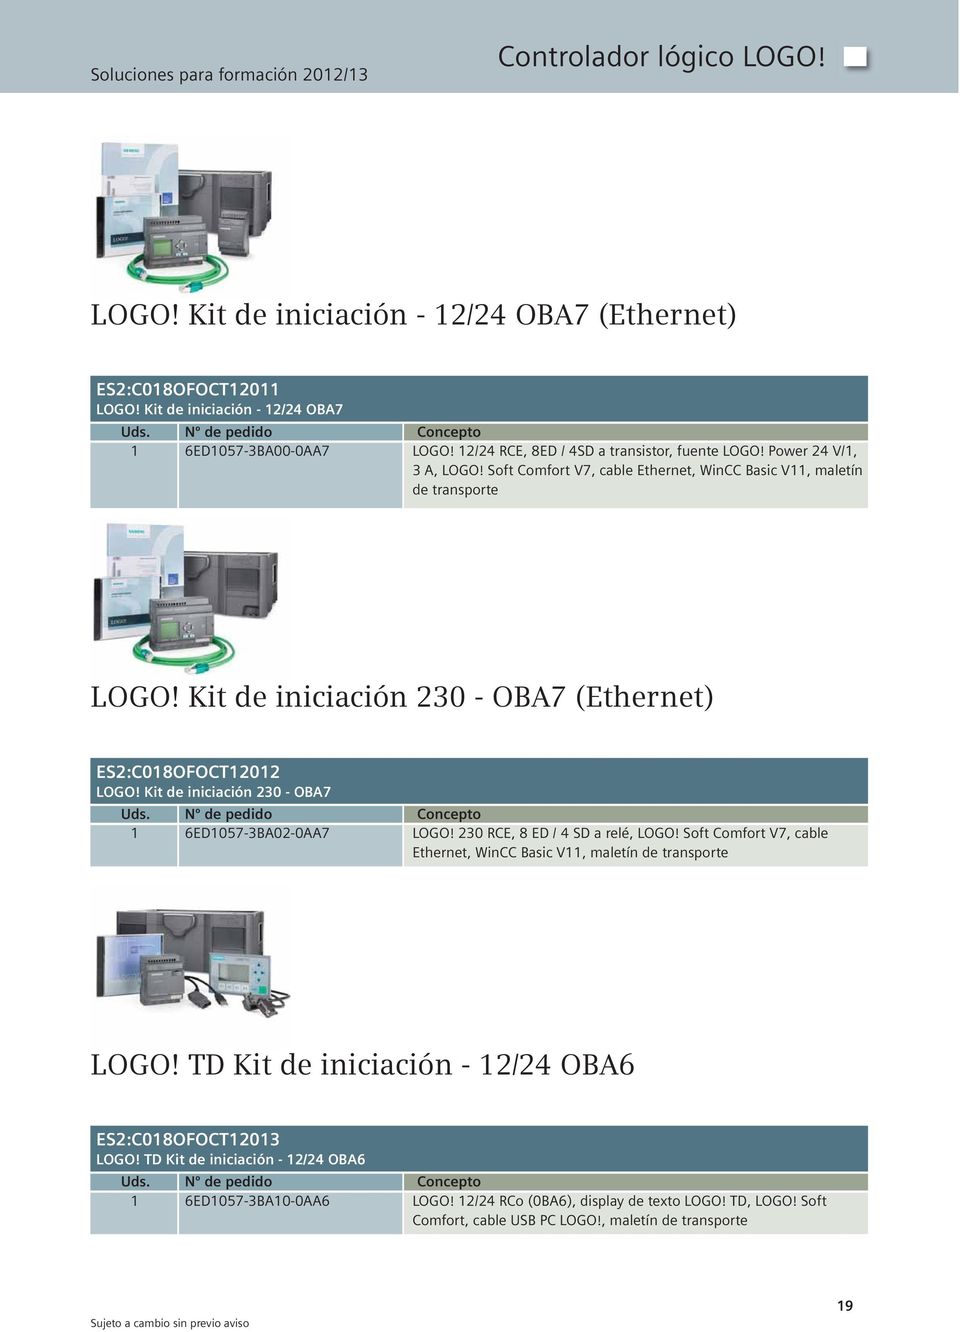 Kit de iniciación 230 - OBA7 (Ethernet) ES2:C018OFOCT12012 LOGO! Kit de iniciación 230 - OBA7 1 6ED1057-3BA02-0AA7 LOGO! 230 RCE, 8 ED / 4 SD a relé, LOGO!